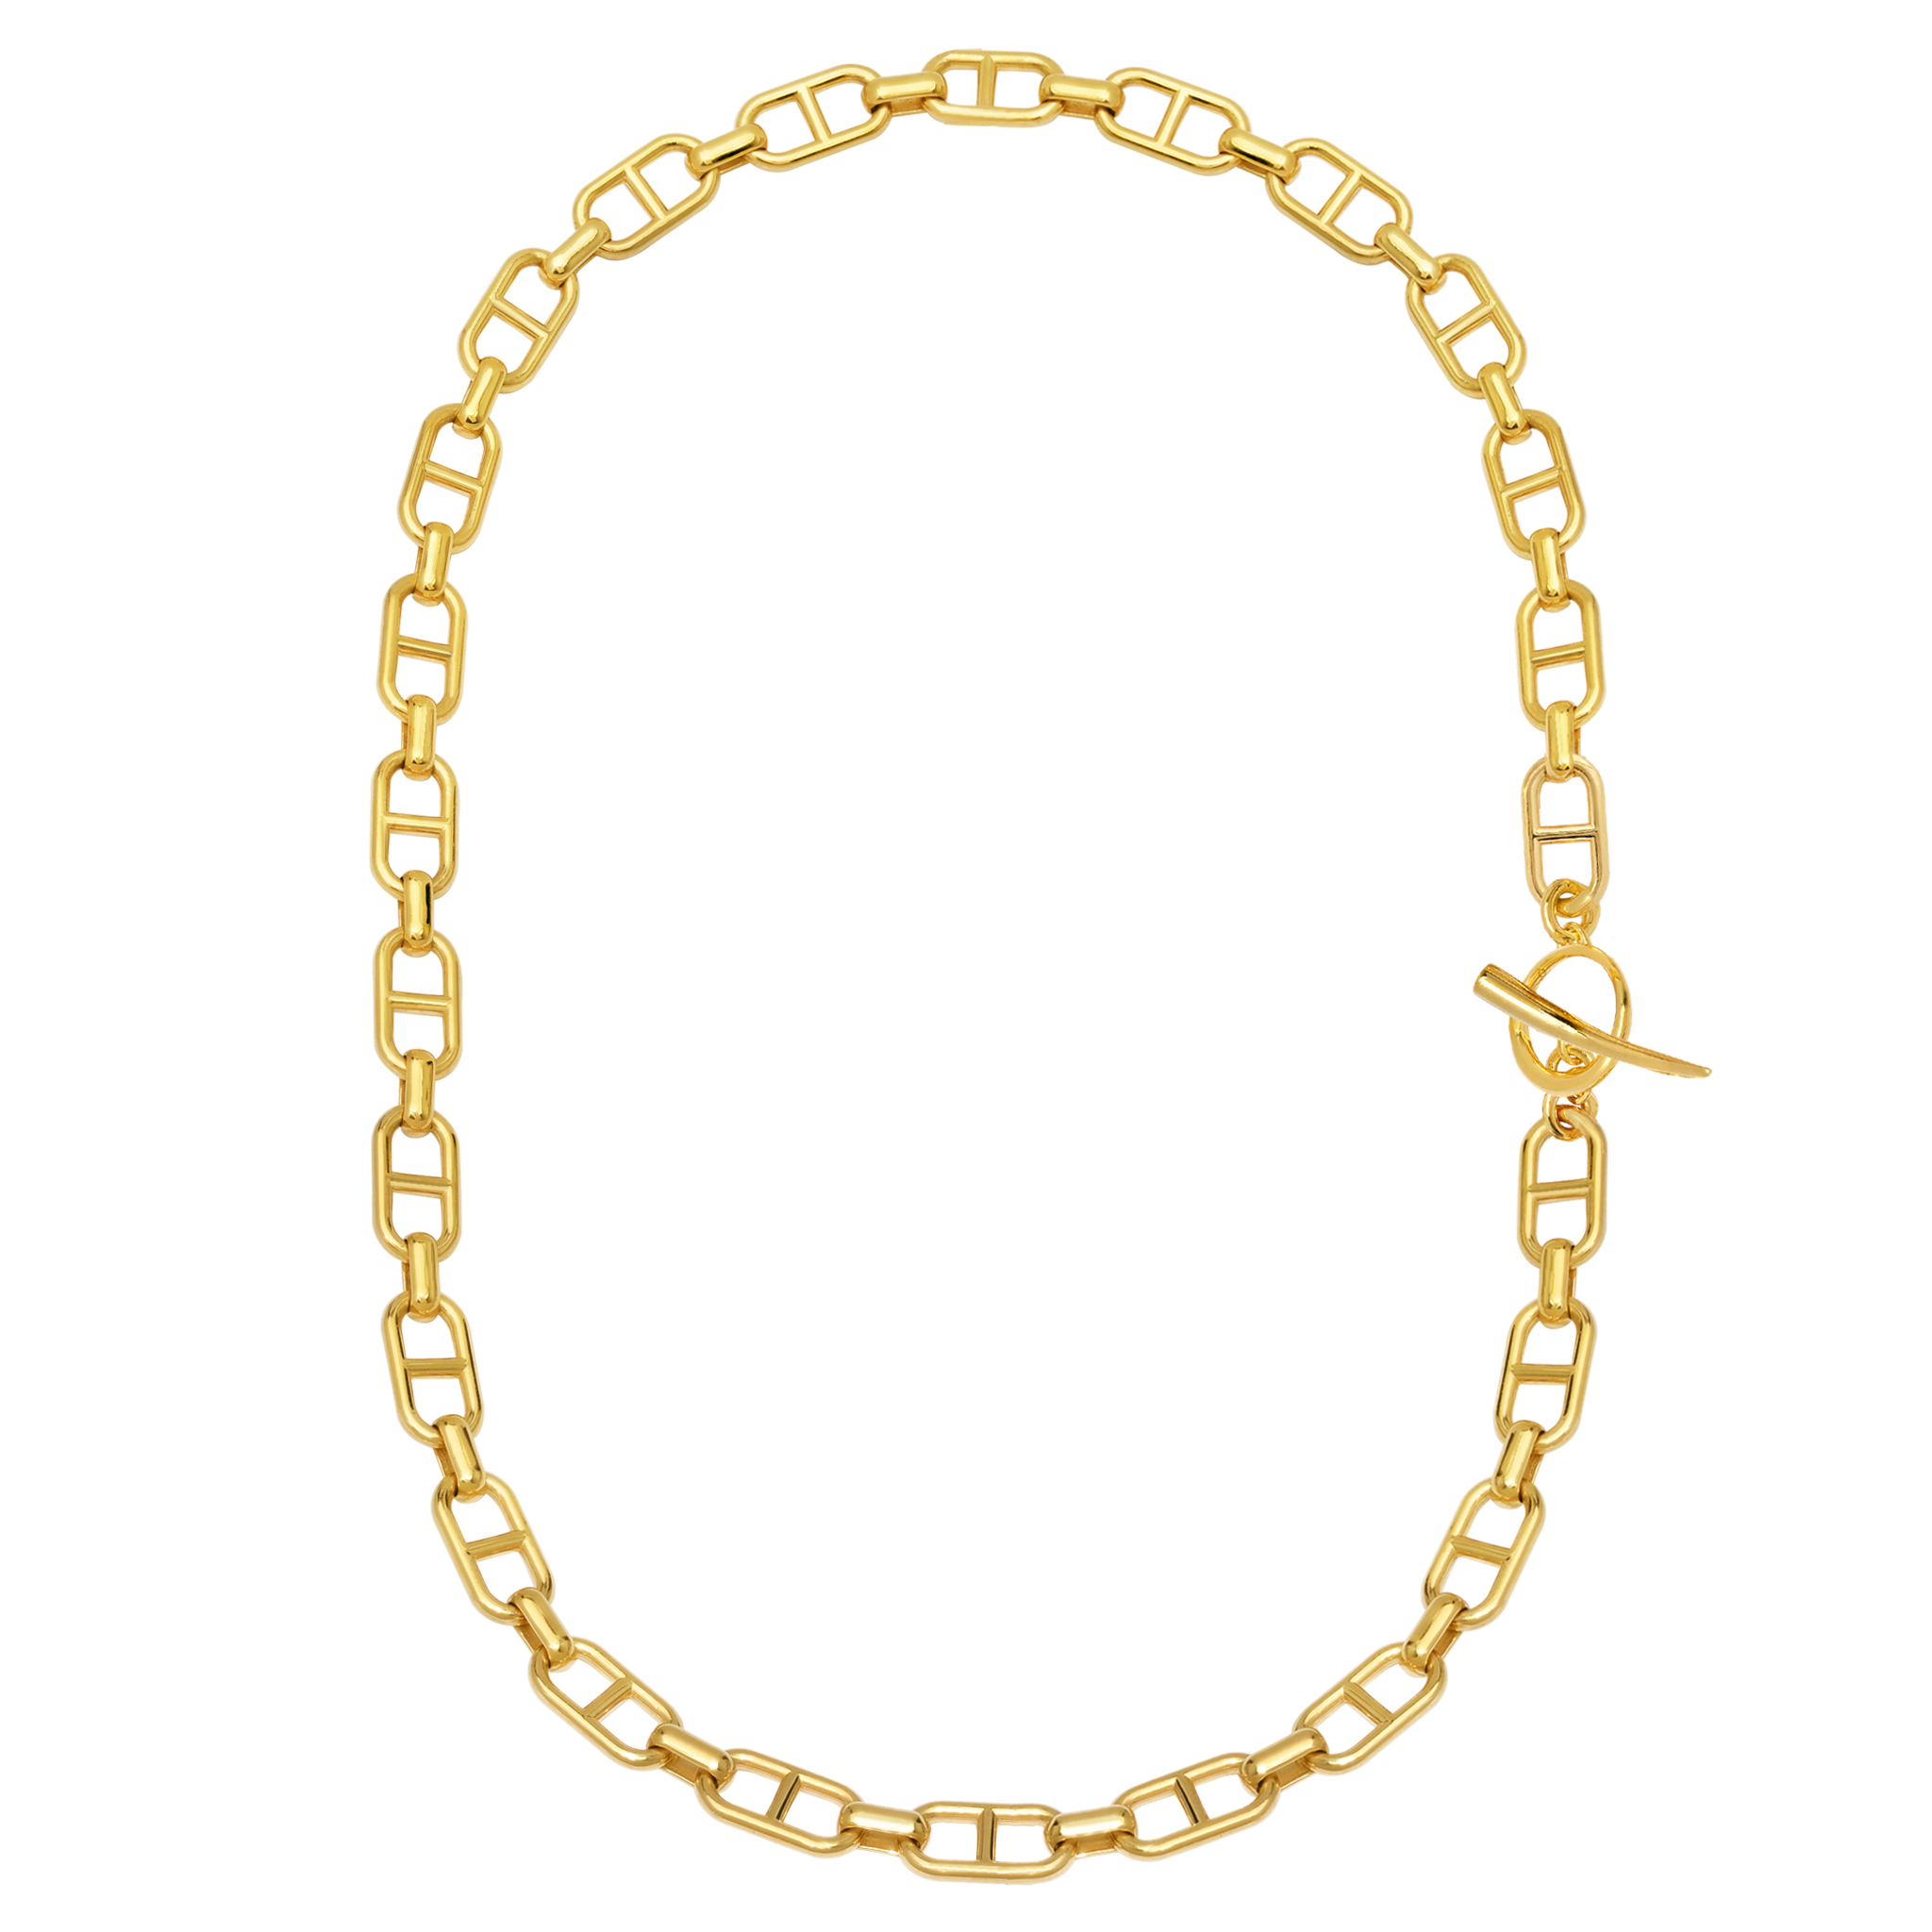 Stirrup Chain Necklace - Gabriela Artigas